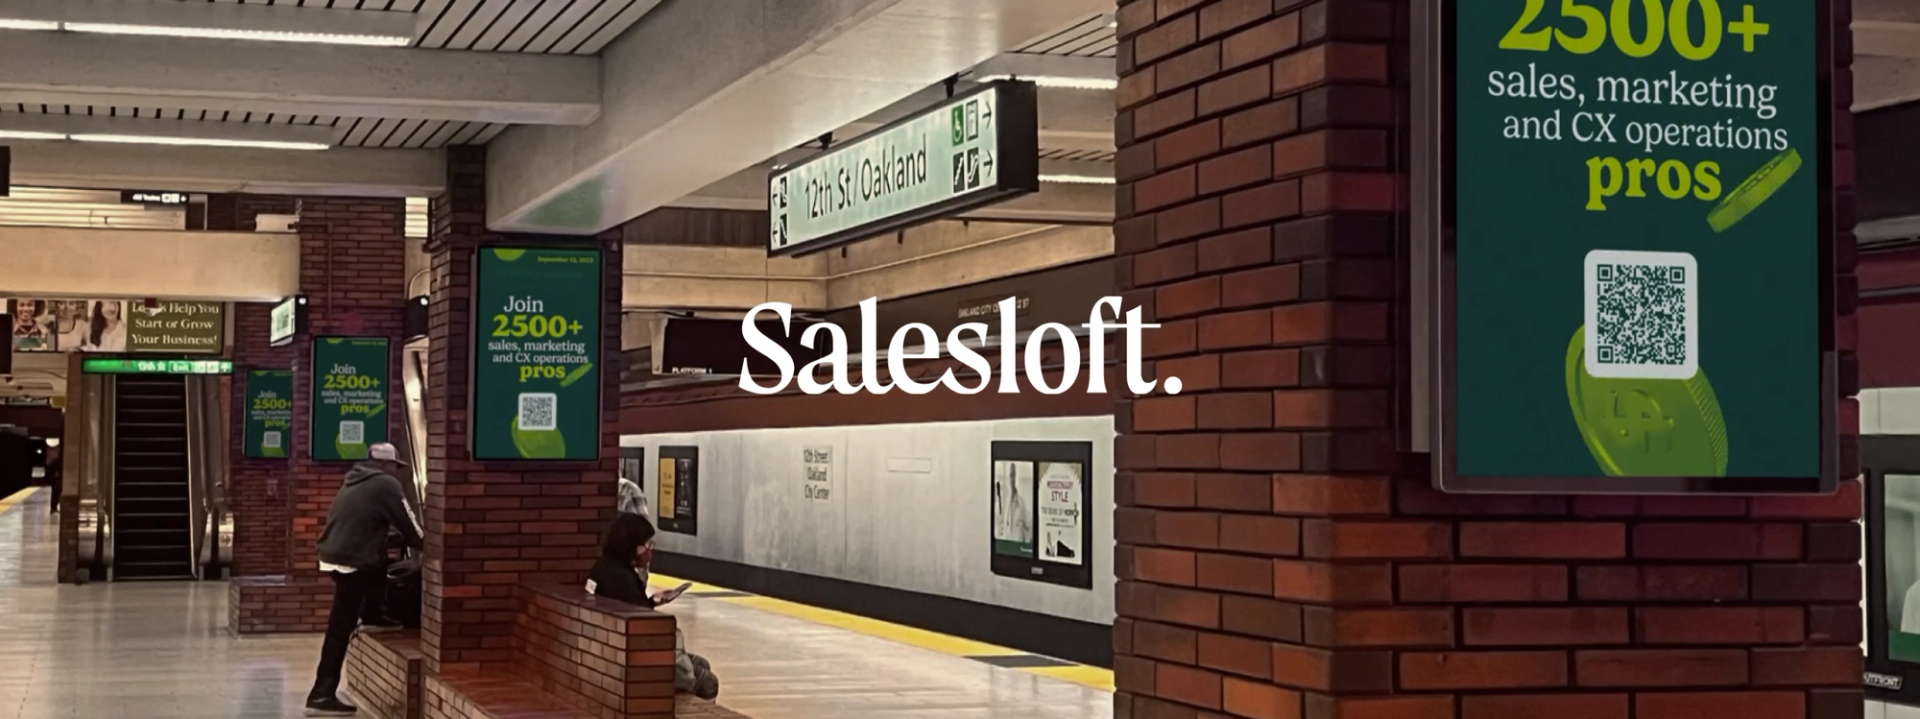 Elevating Sales Engagement: Salesloft's Innovative Subway Video Campaign